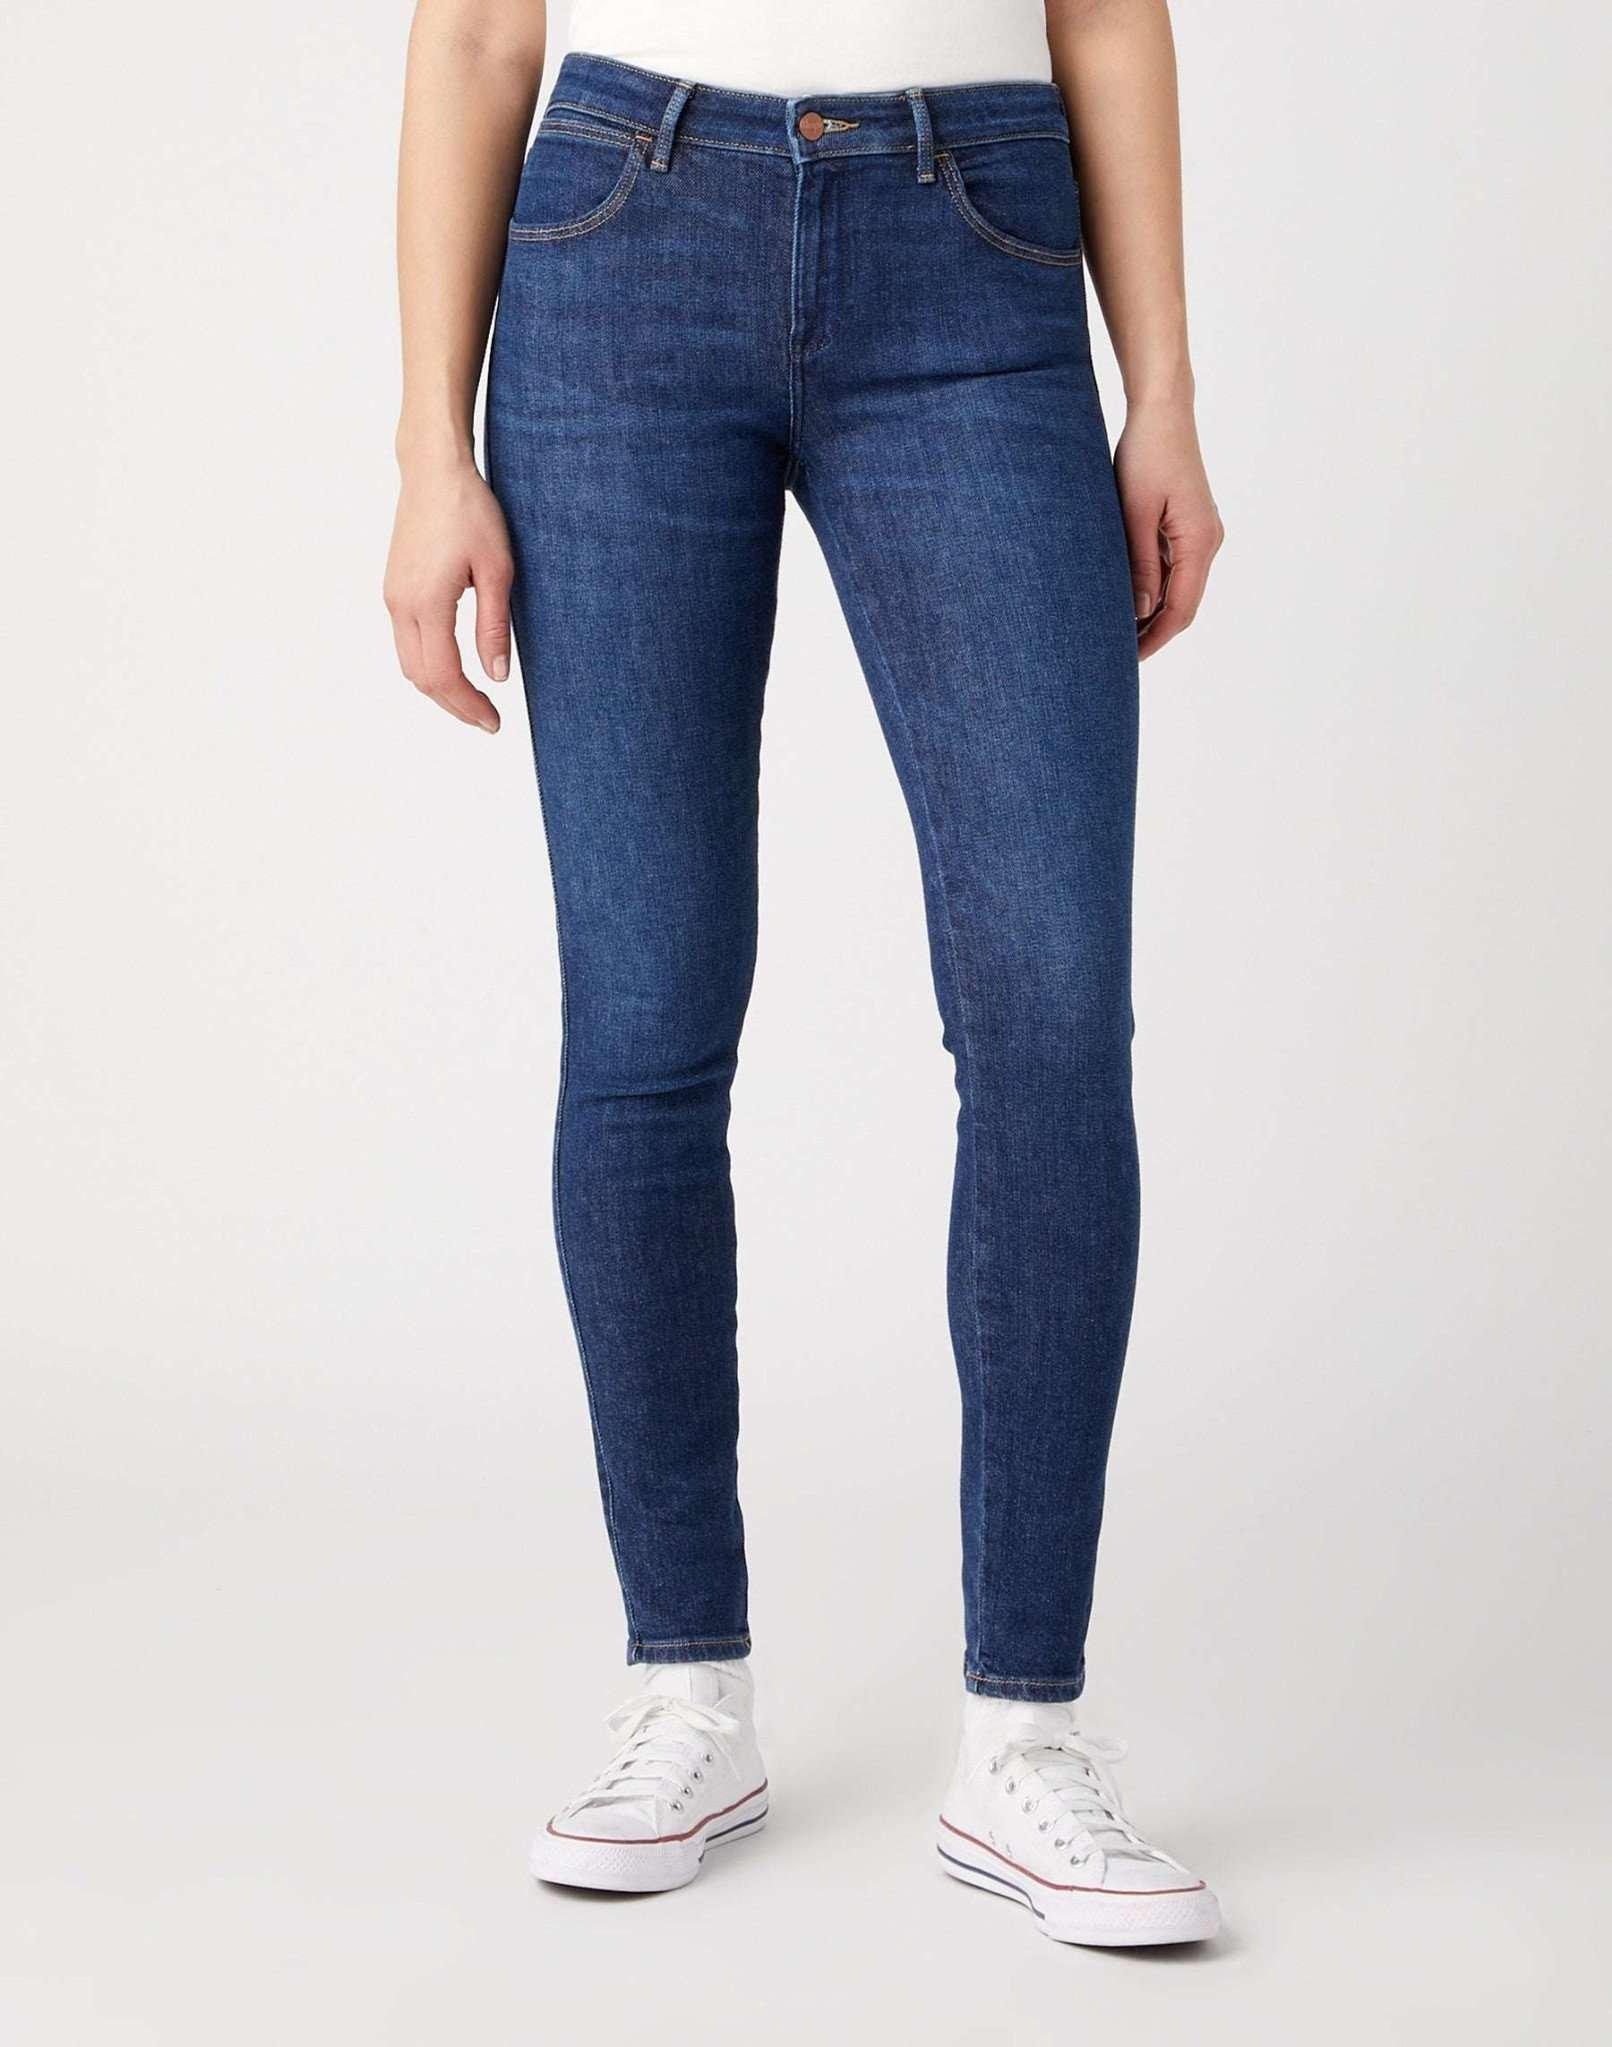 Jeans Skinny Fit Skinny Damen Blau L32/W26 von Wrangler